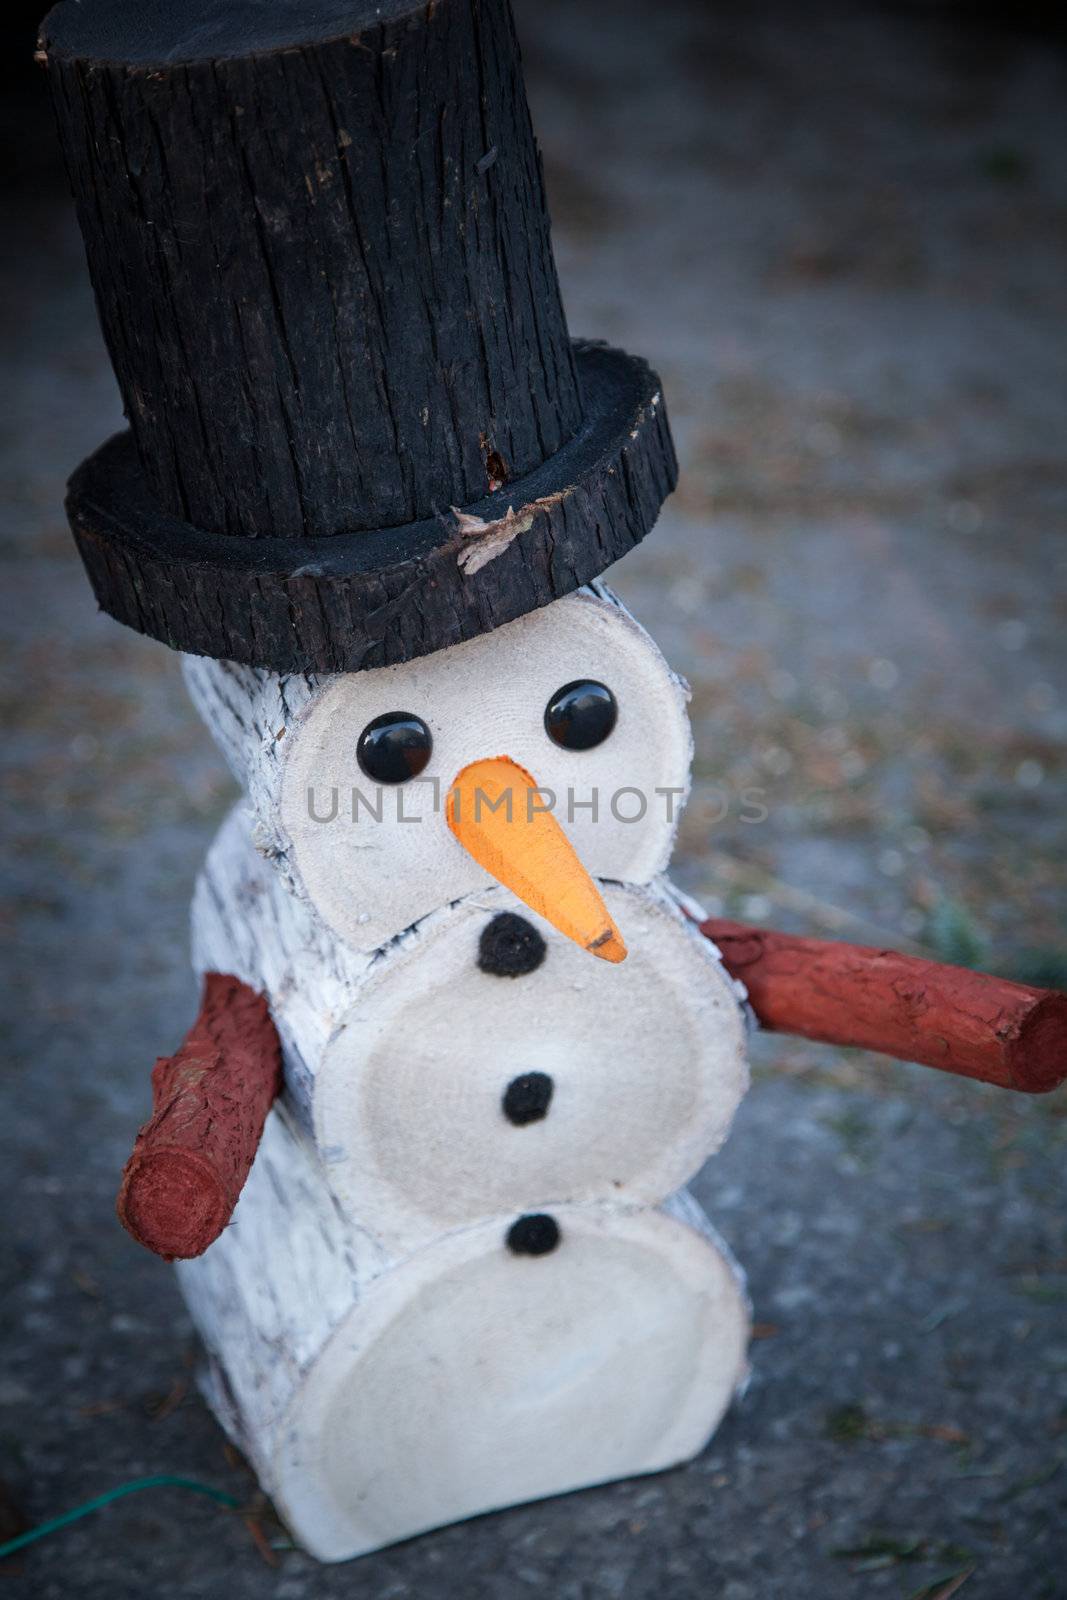 Decorative wooden snowman by Izaphoto